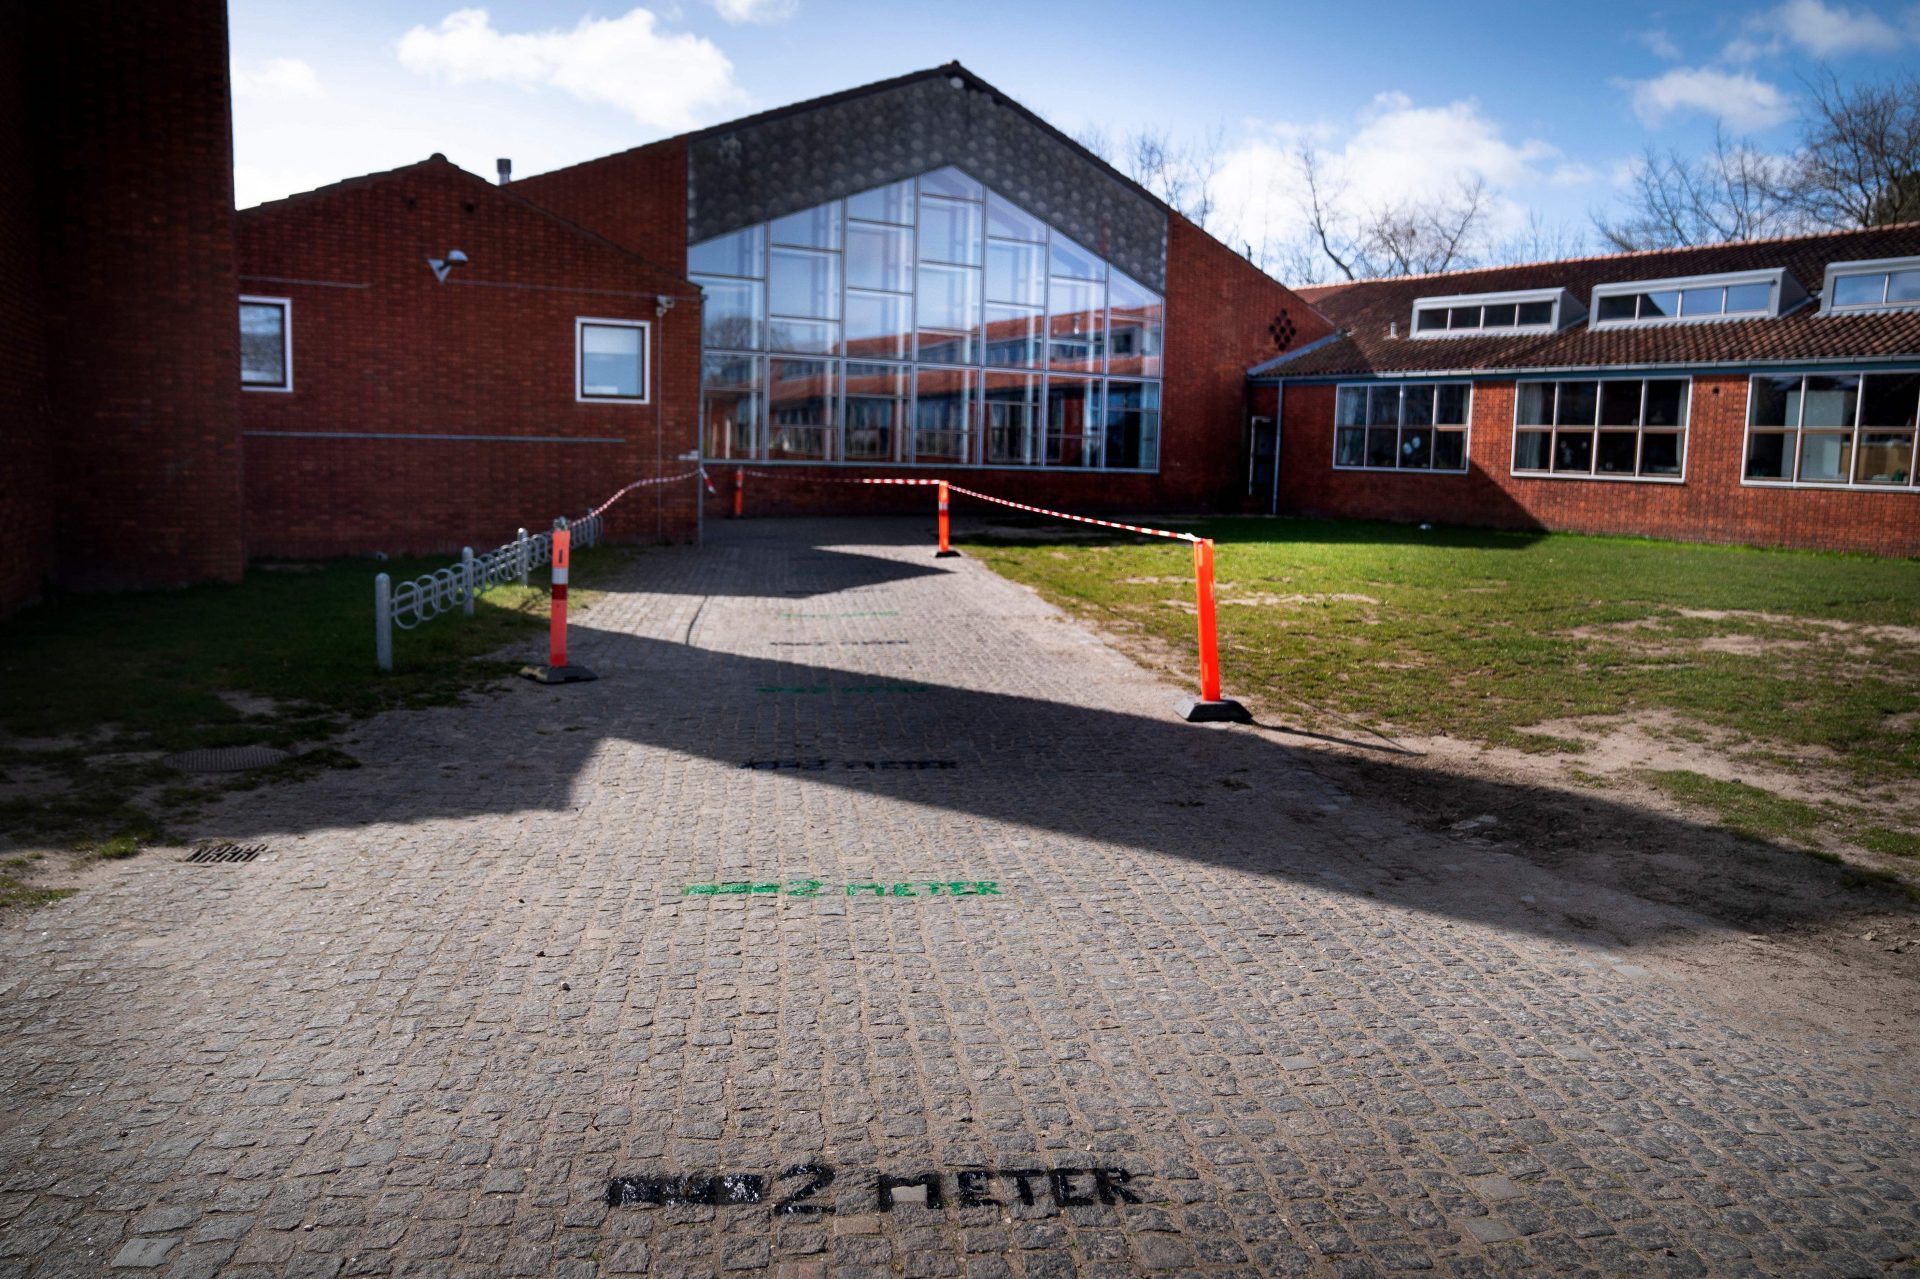 Coronavirus precautions at Stengaard School in Gladsaxe, Denmark.